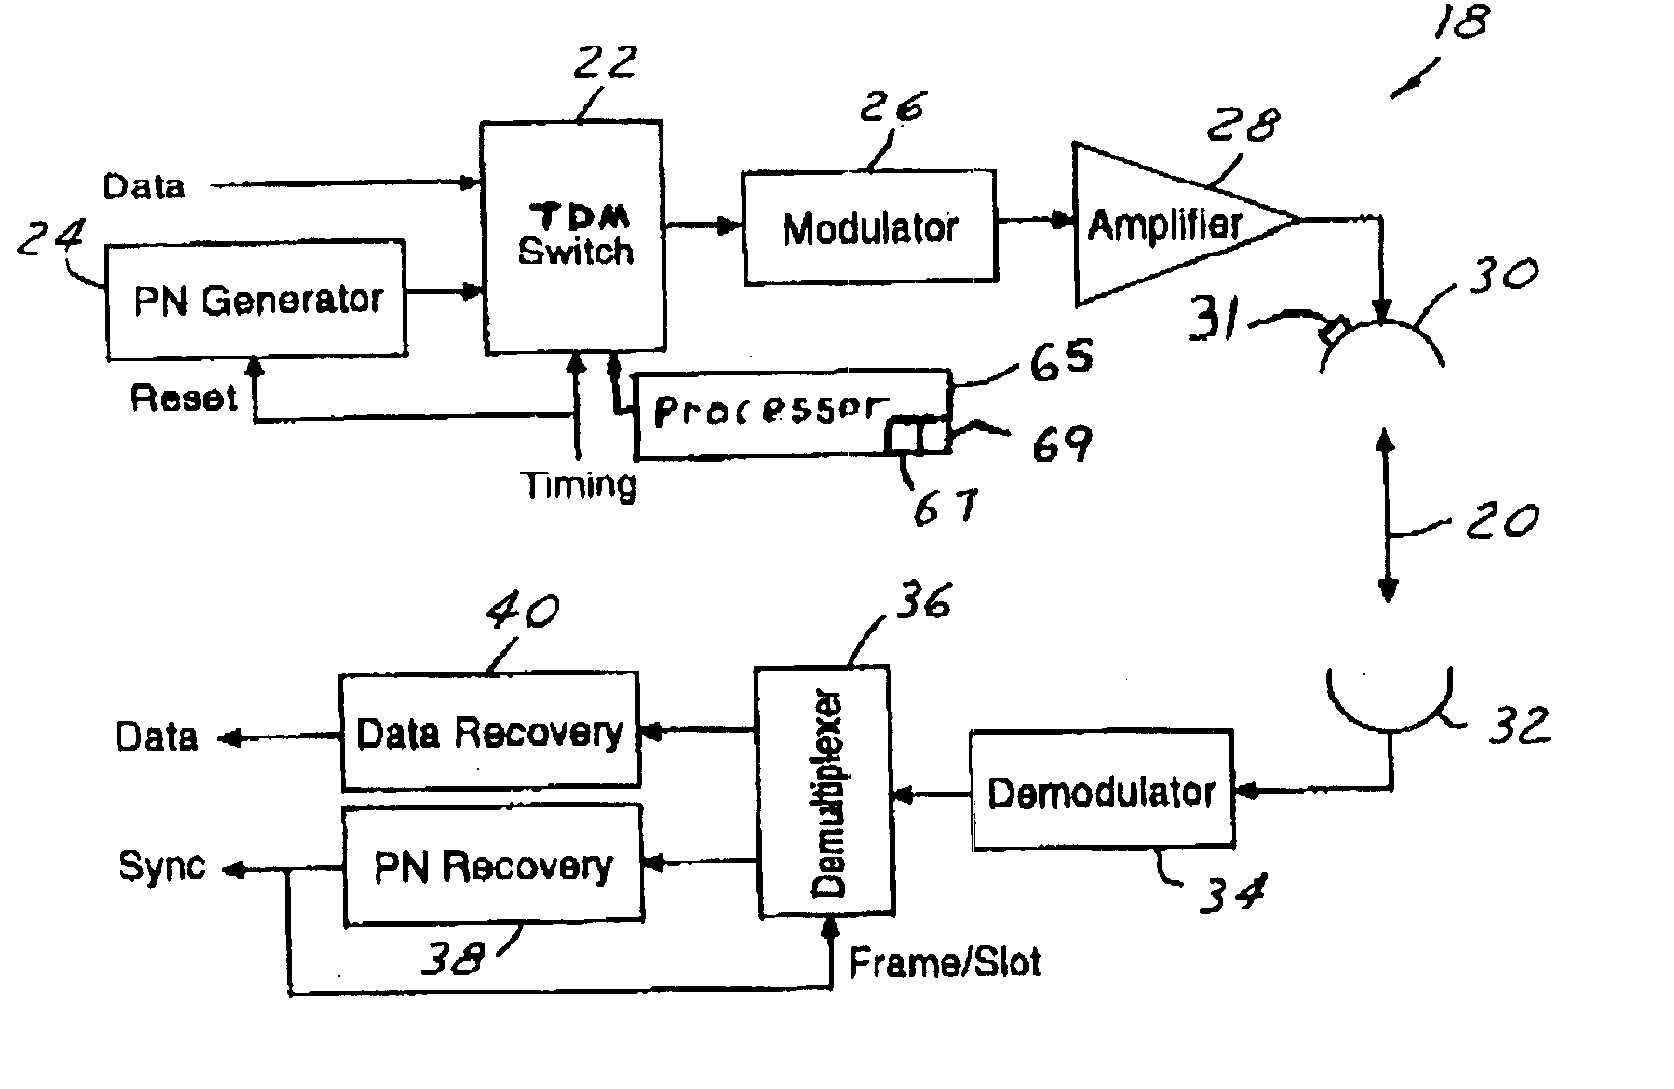 Multimode transmission system using TDMA